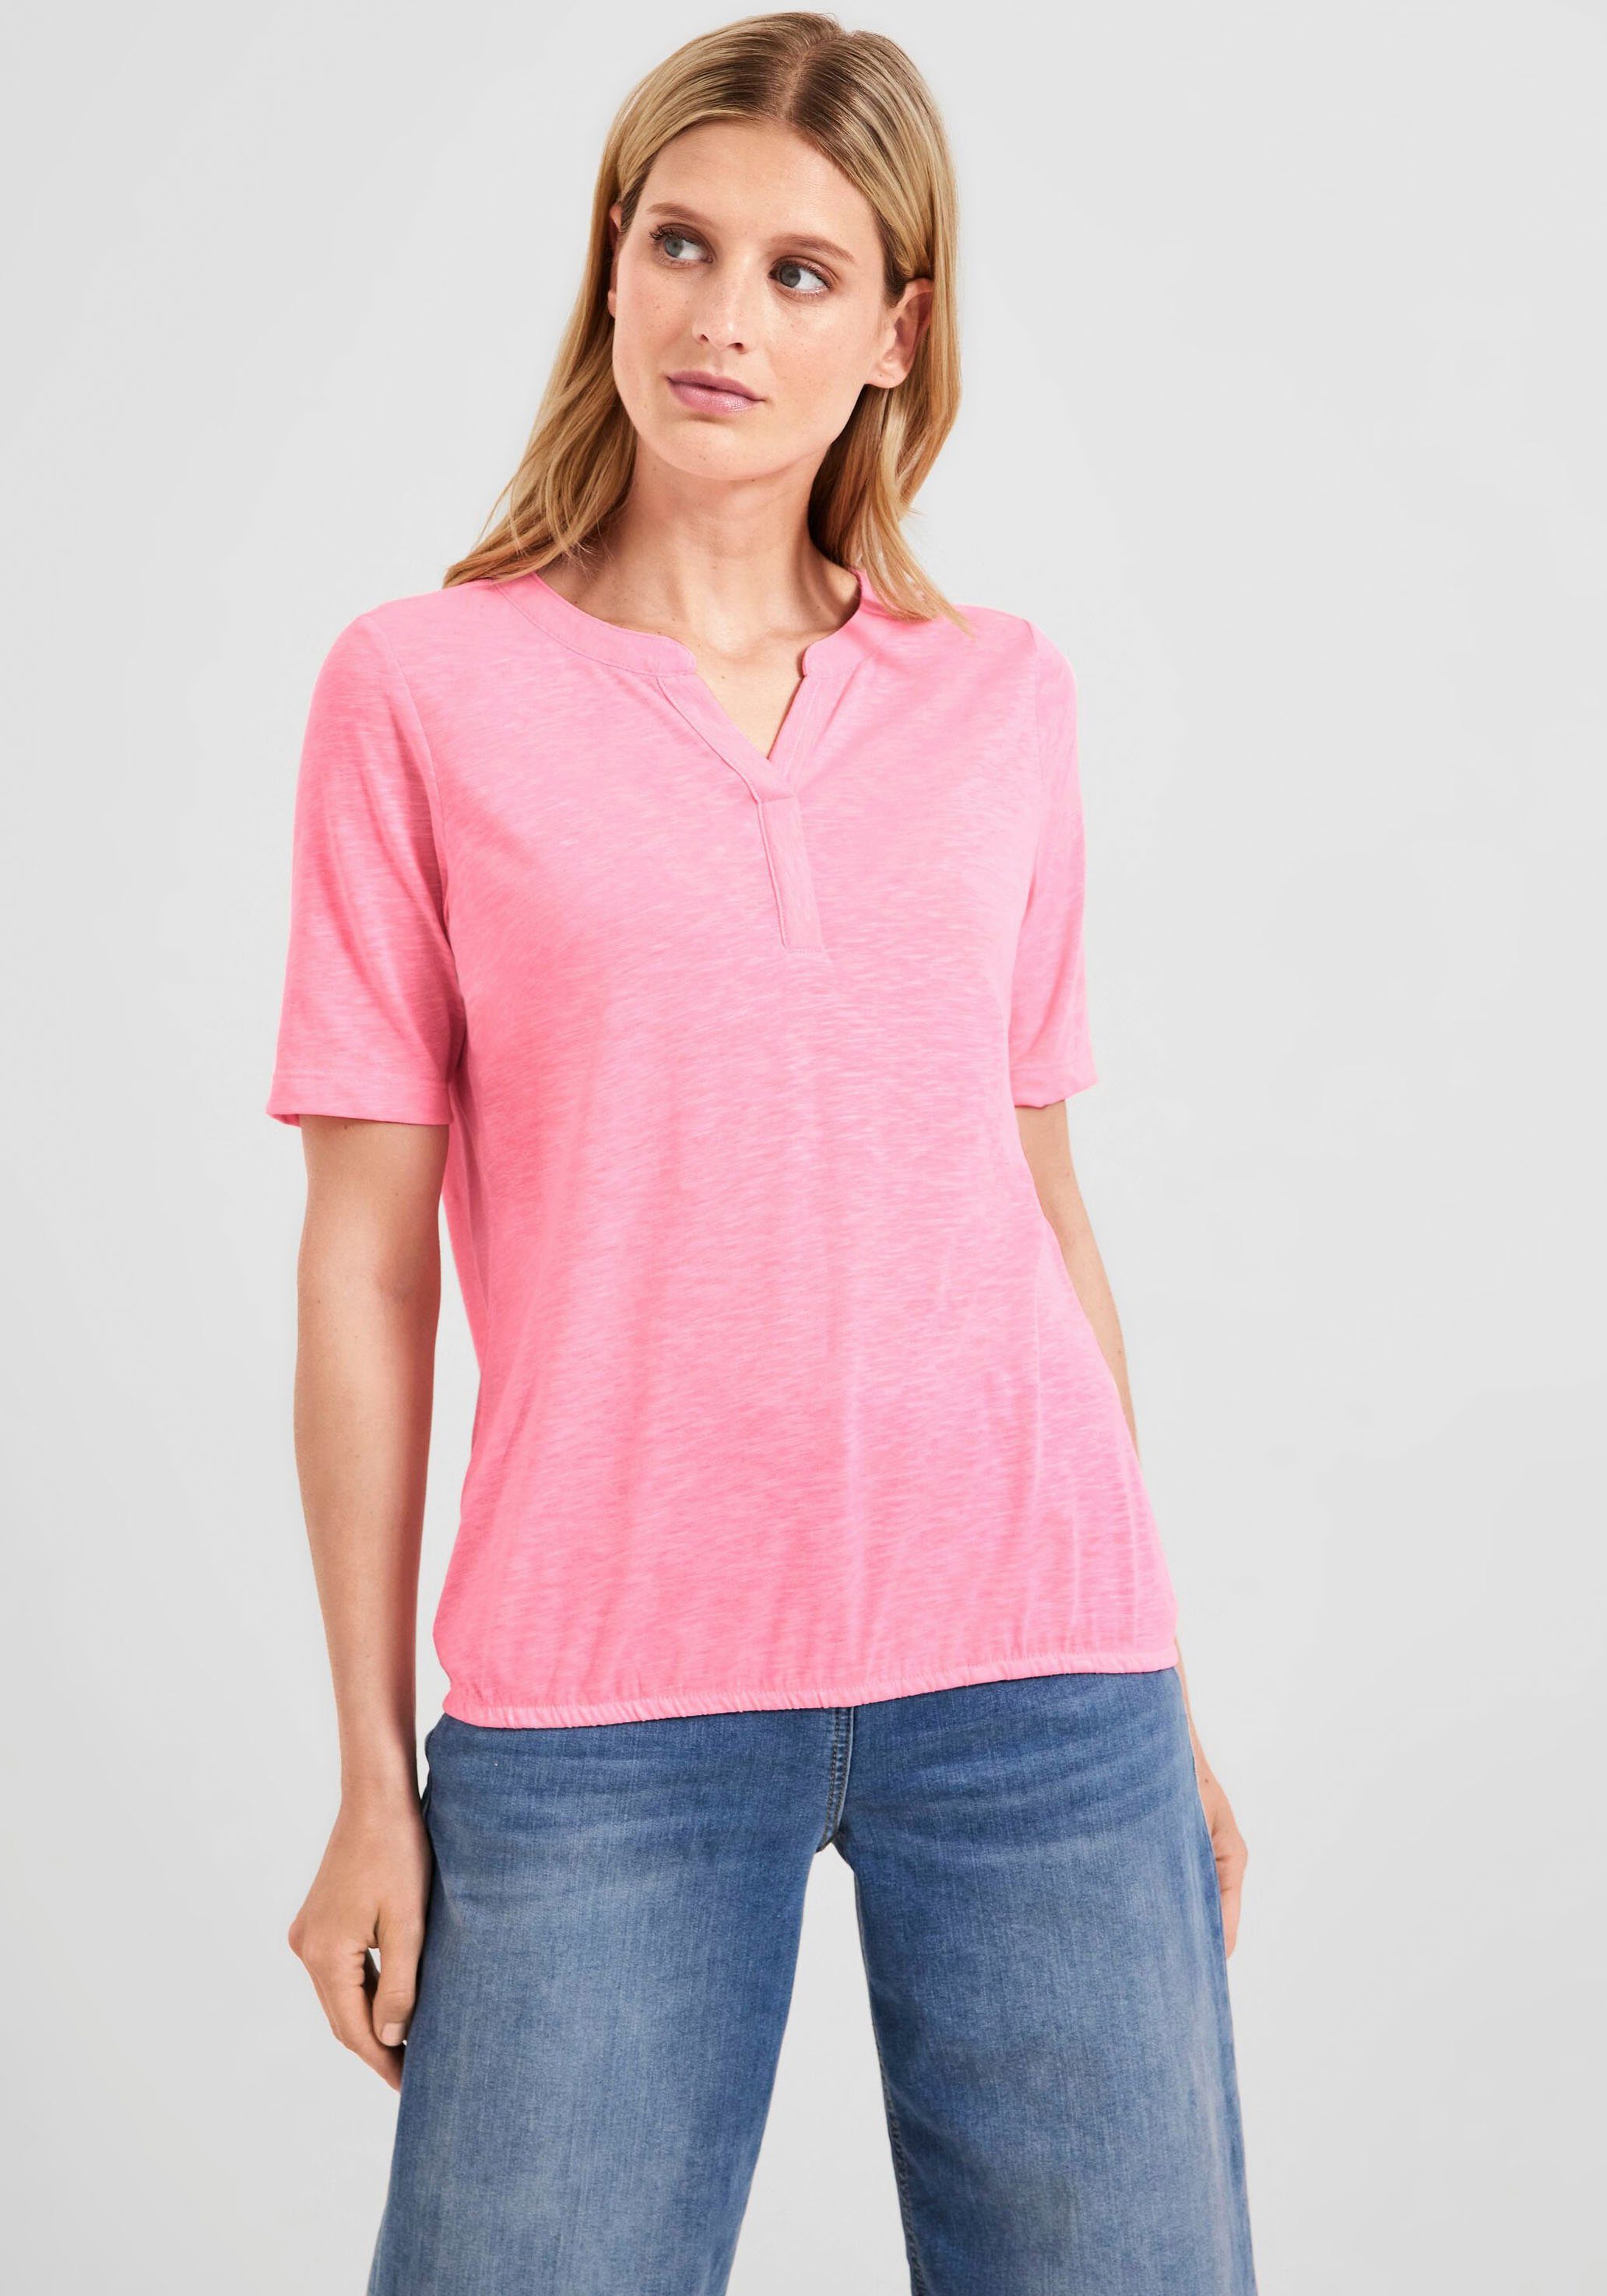 Cecil Shirttop in Melange Optik soft neon pink | Tops